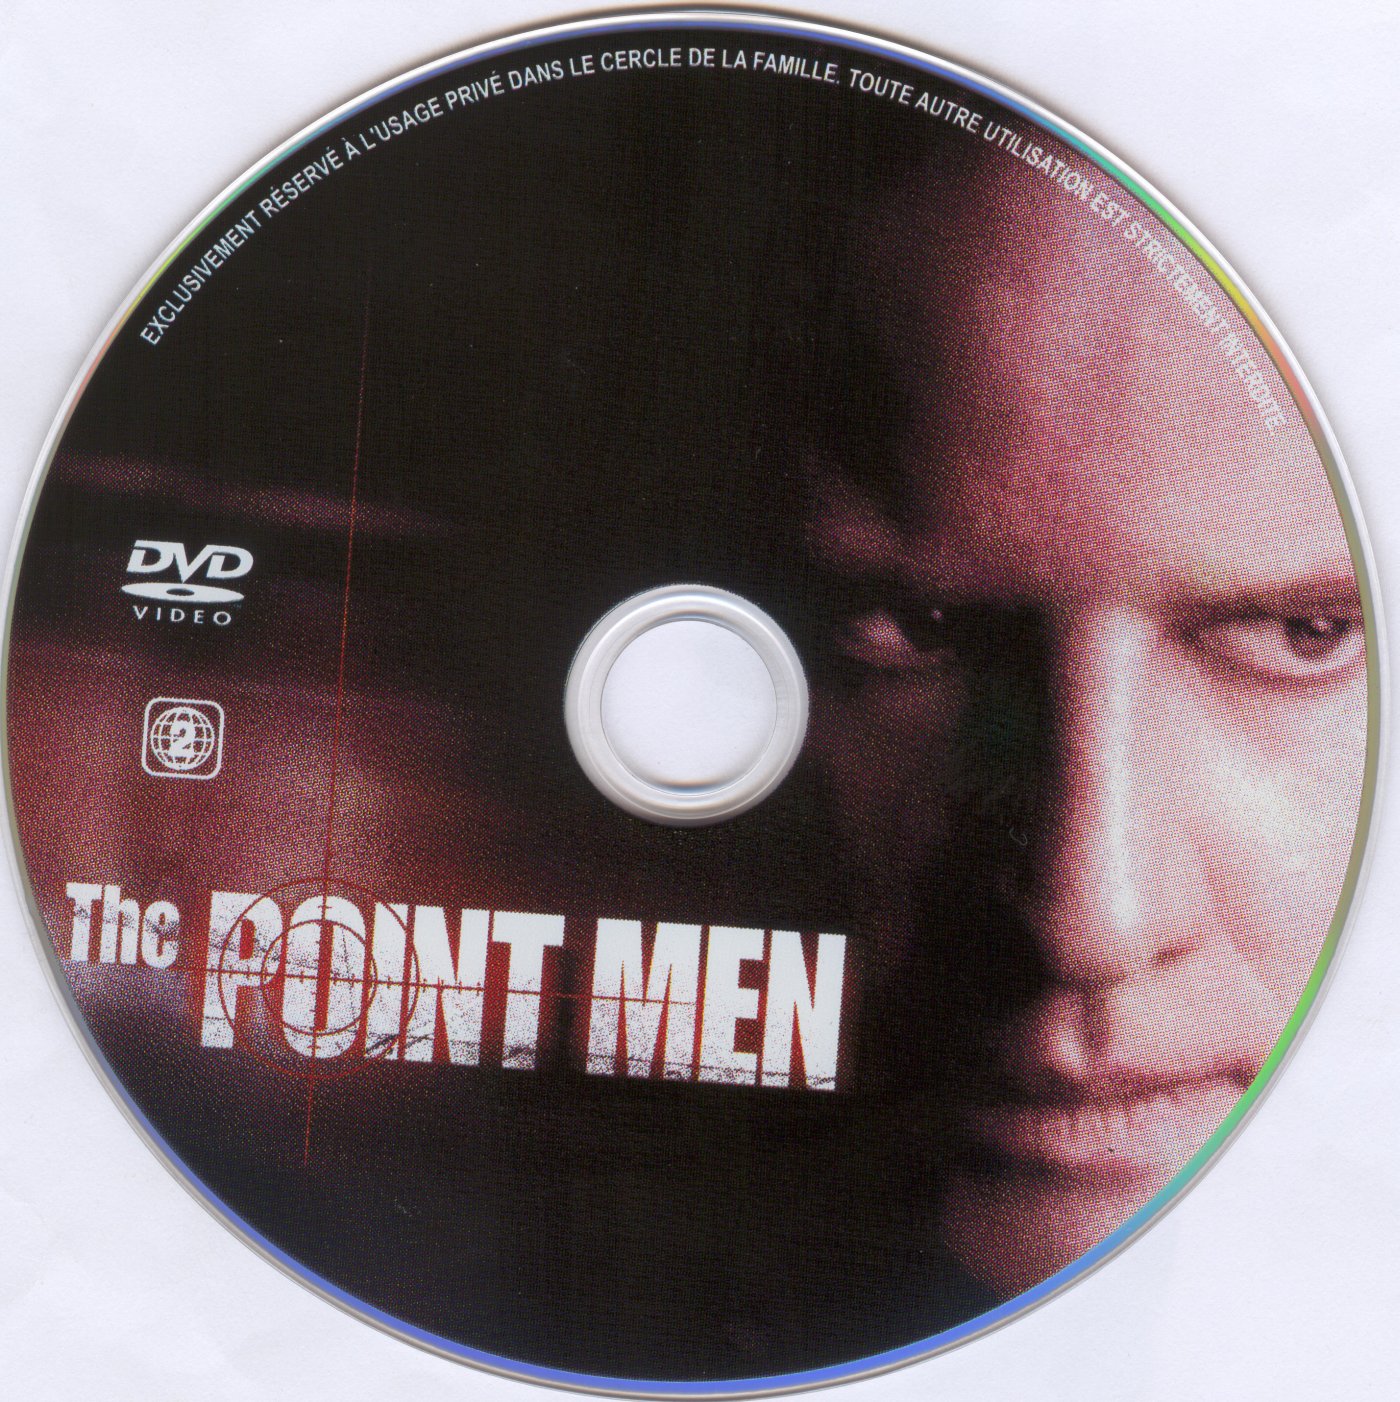 The point men